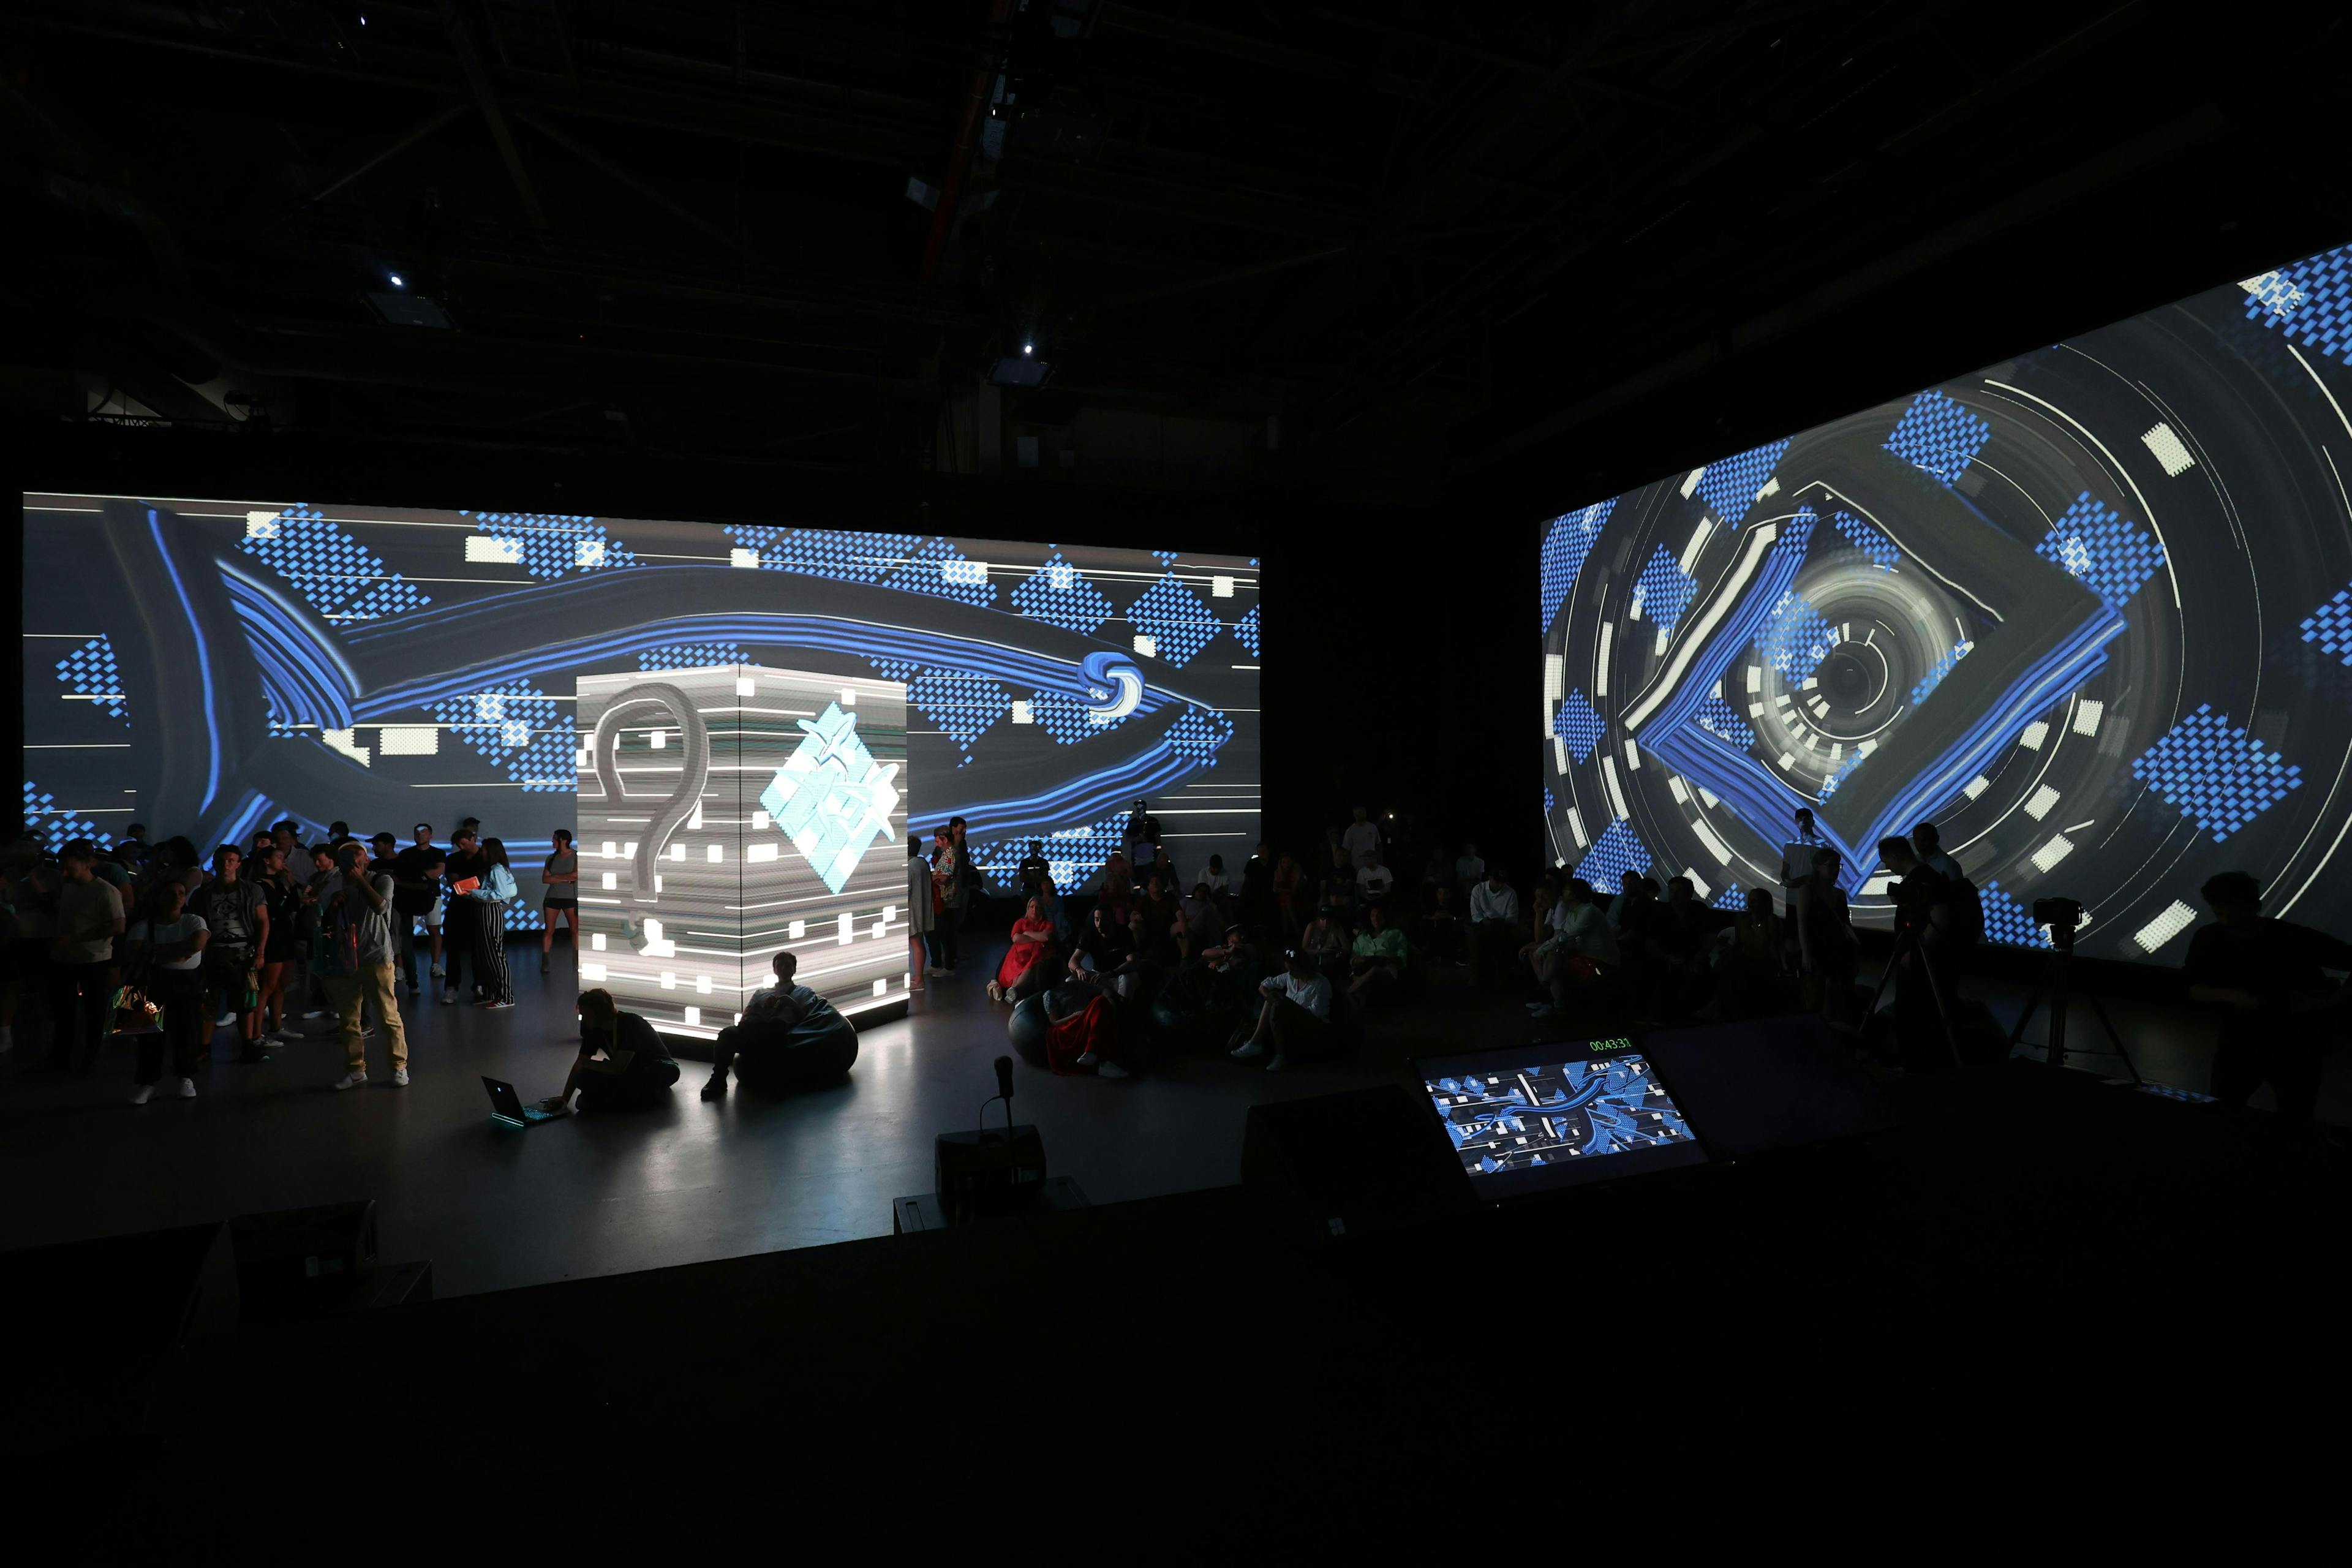 people person stage lighting cinema shoe screen planetarium monitor crowd